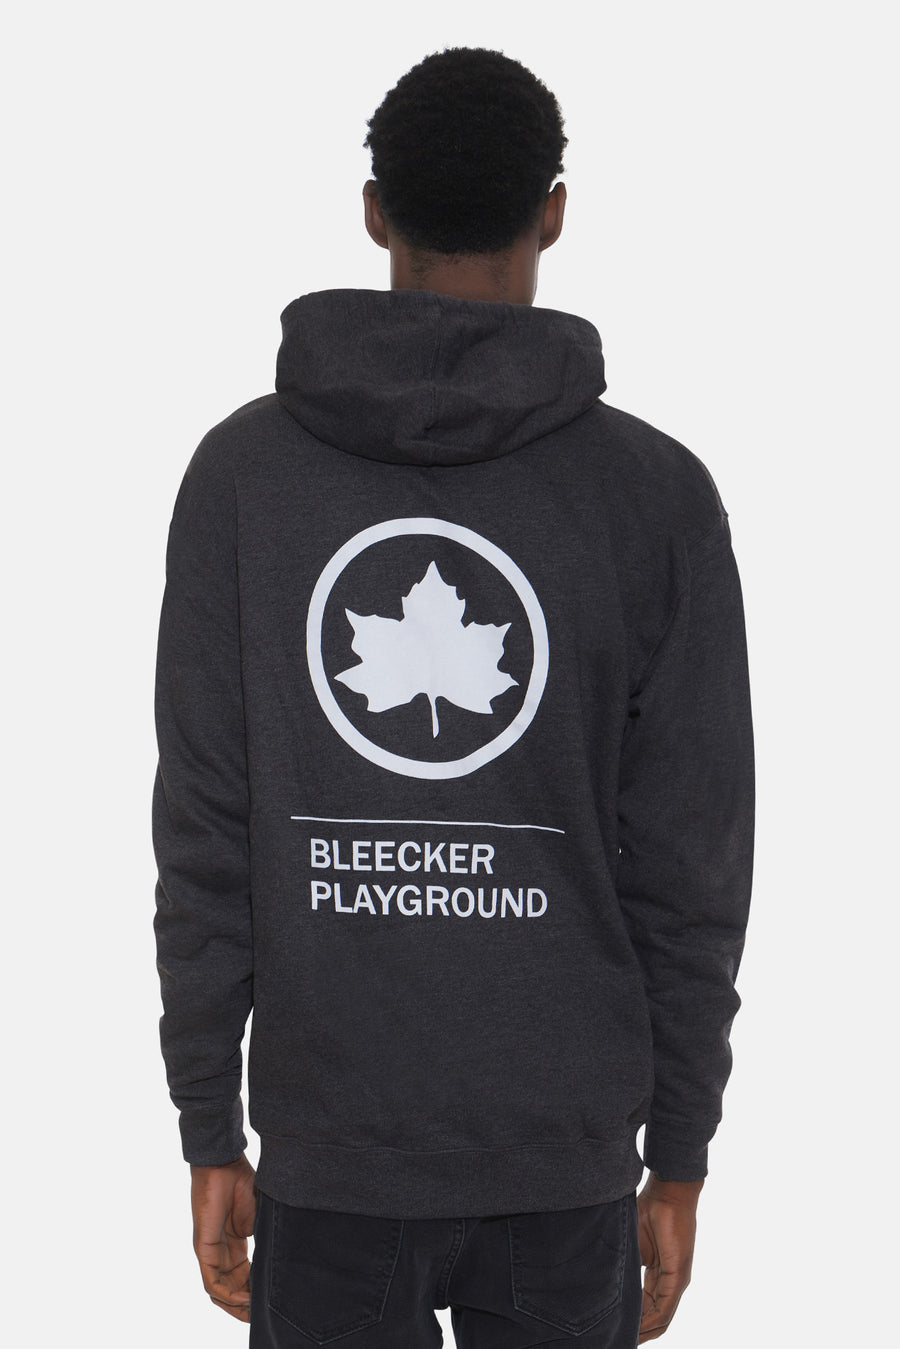 Bleecker Playground Zip Hoodie Charcoal